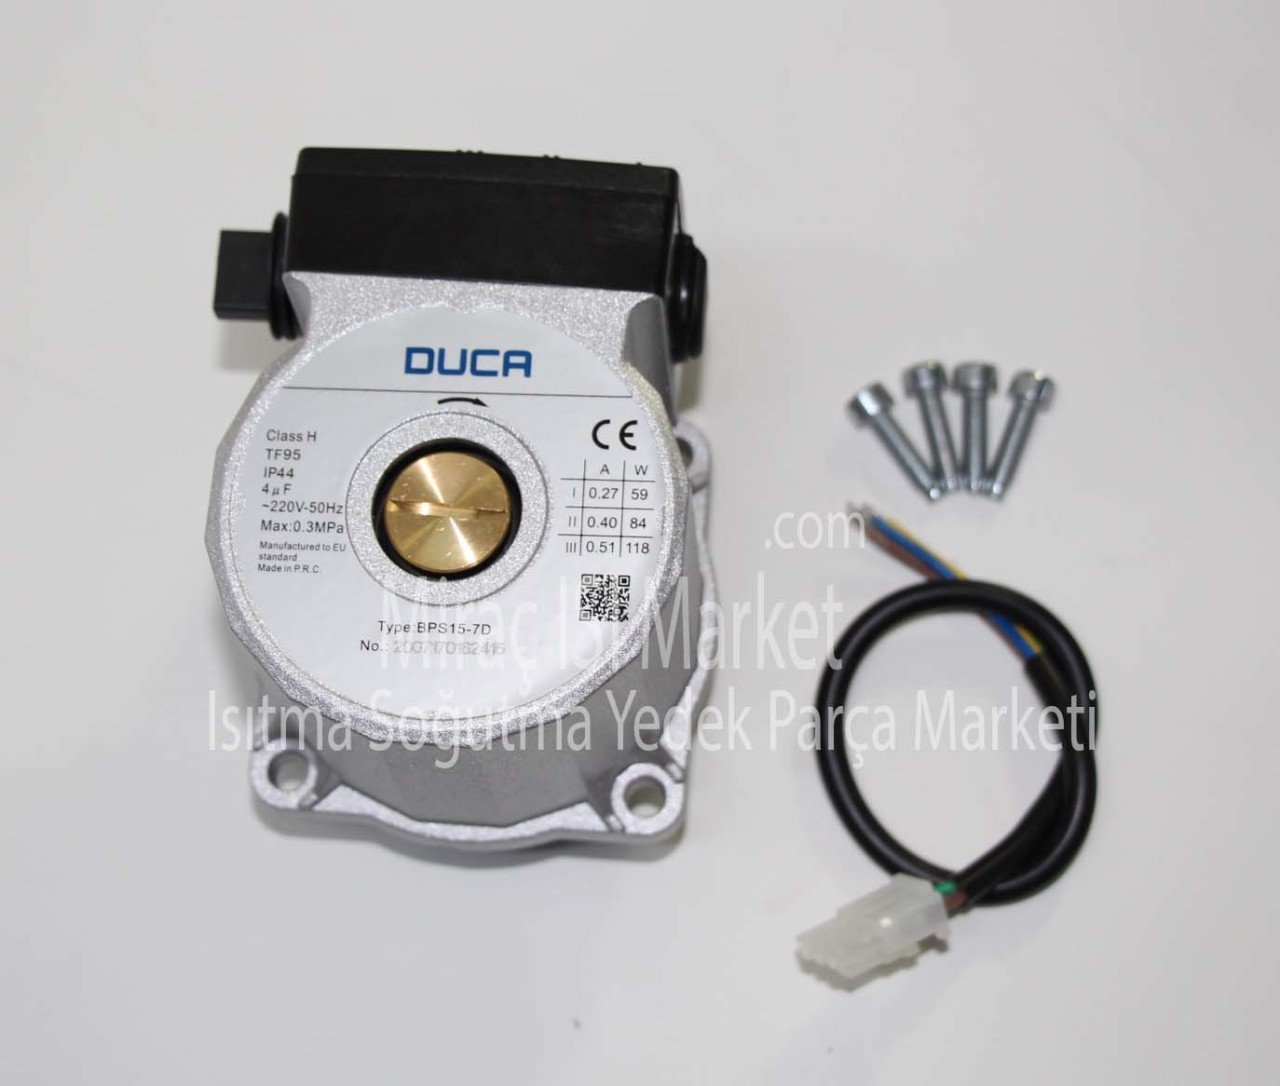 118 Watt . Duca sirkülasyon pompa motoru . Wilo ya uyumlu muadil bir ürün ( KK01.98.339 ) Duca BPS15-7D - DAR Çarklı Sağa Dönüşlü .